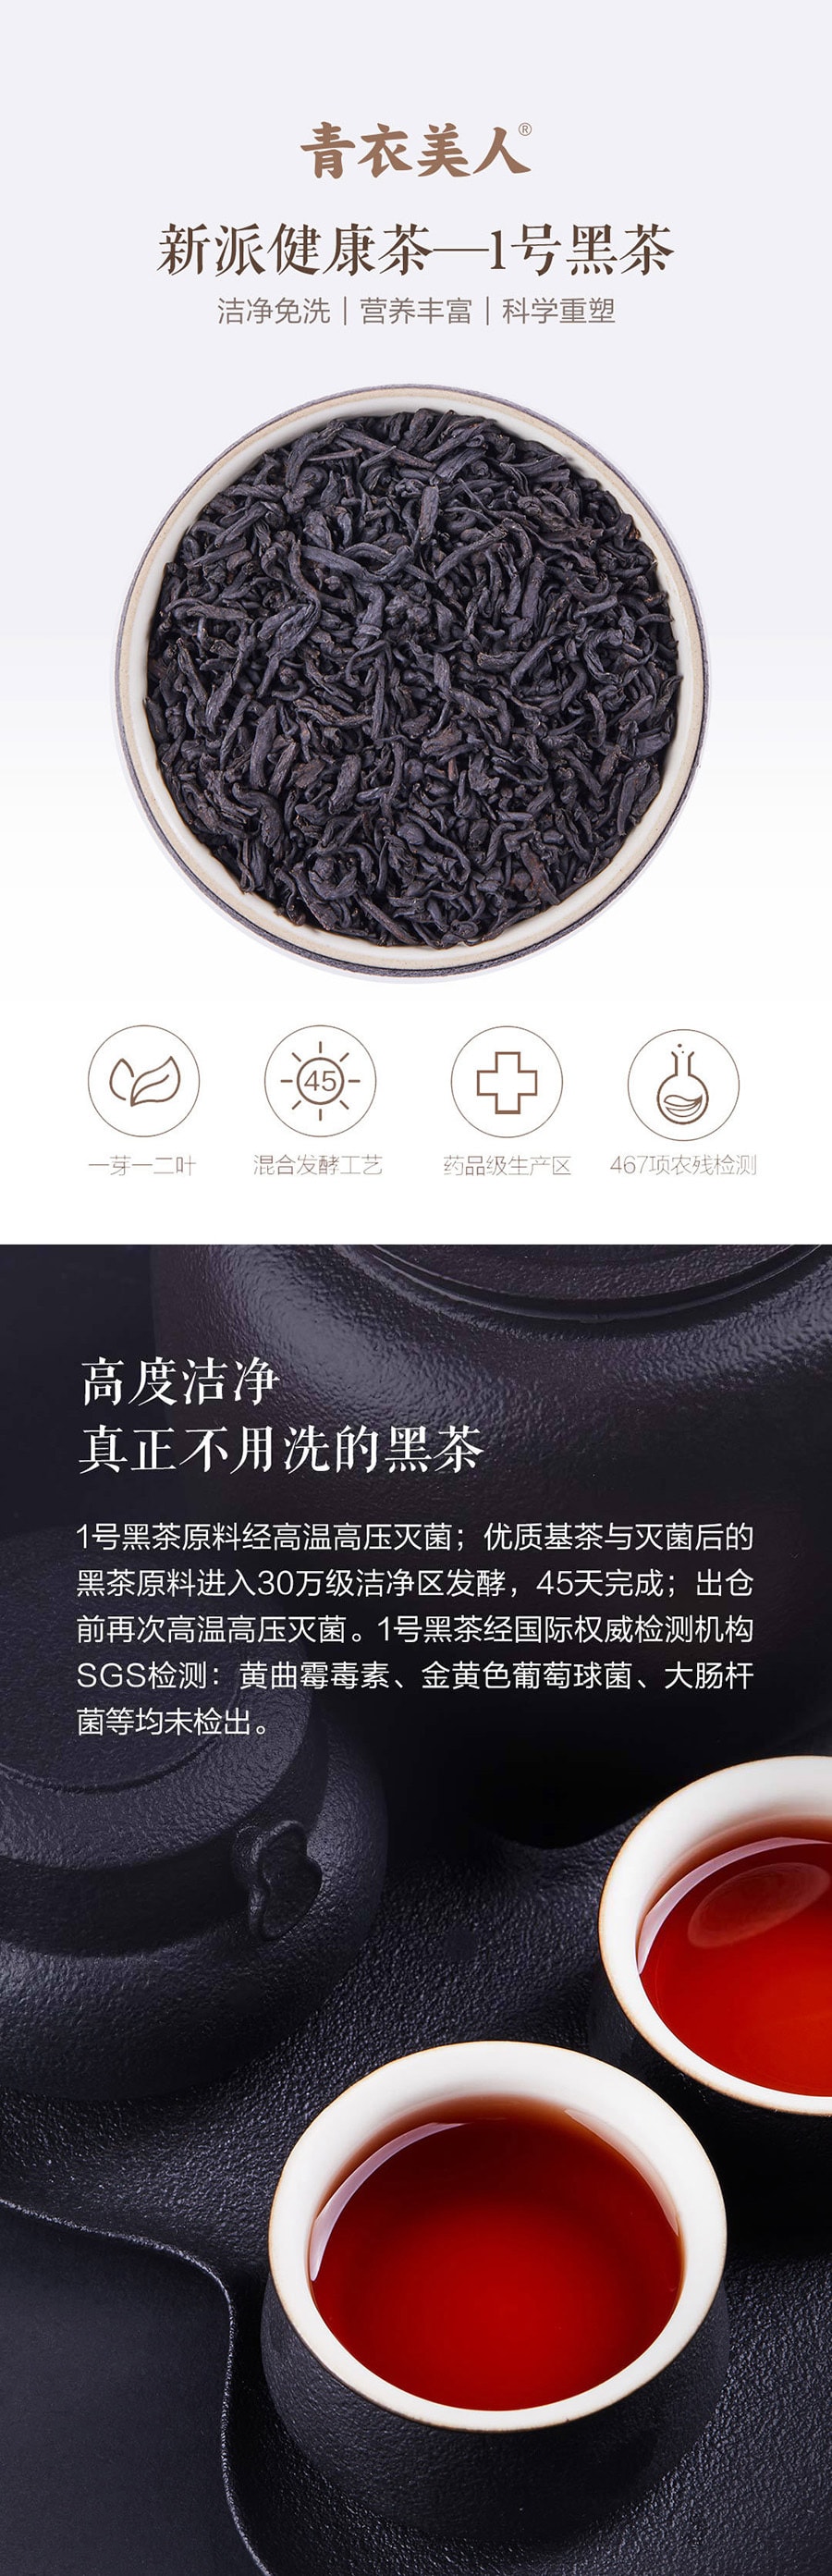 XIAOMI YOUPIN TSING-Yi BEAUTY IMPRESSION LANDSCAPE SERIES No. 1 Black Tea 200g (5gx40 bags / box)